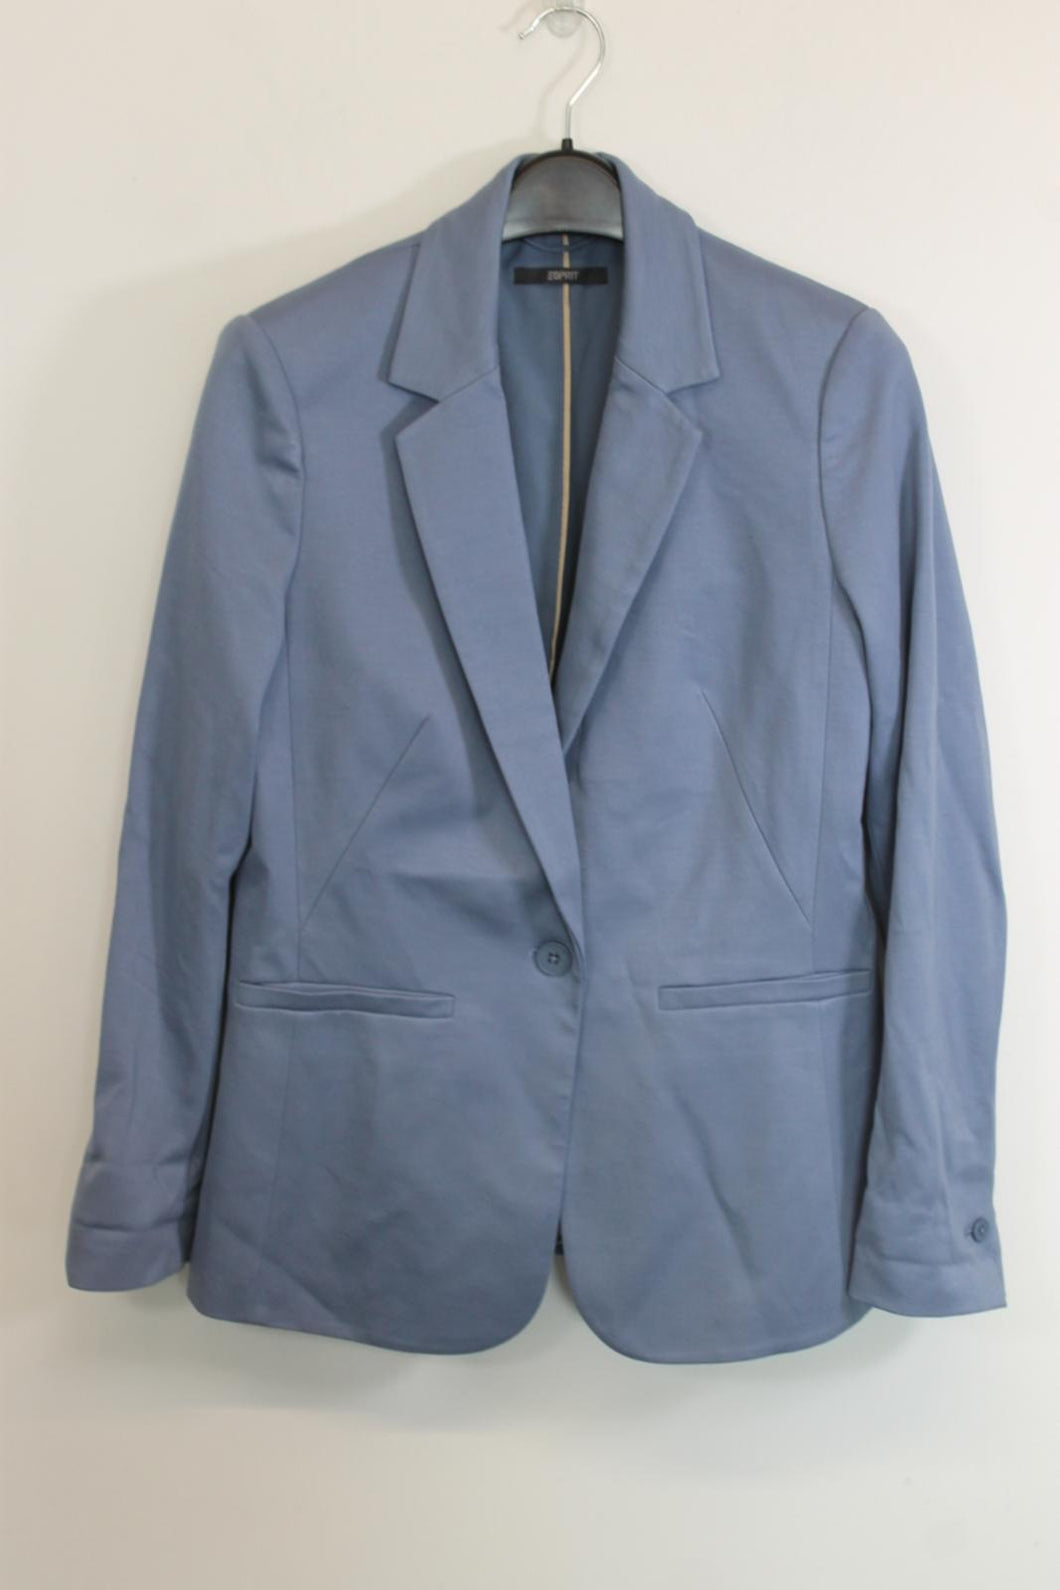 ESPRIT Ladies Dusty Blue Blazer Jacket EU40 UK12